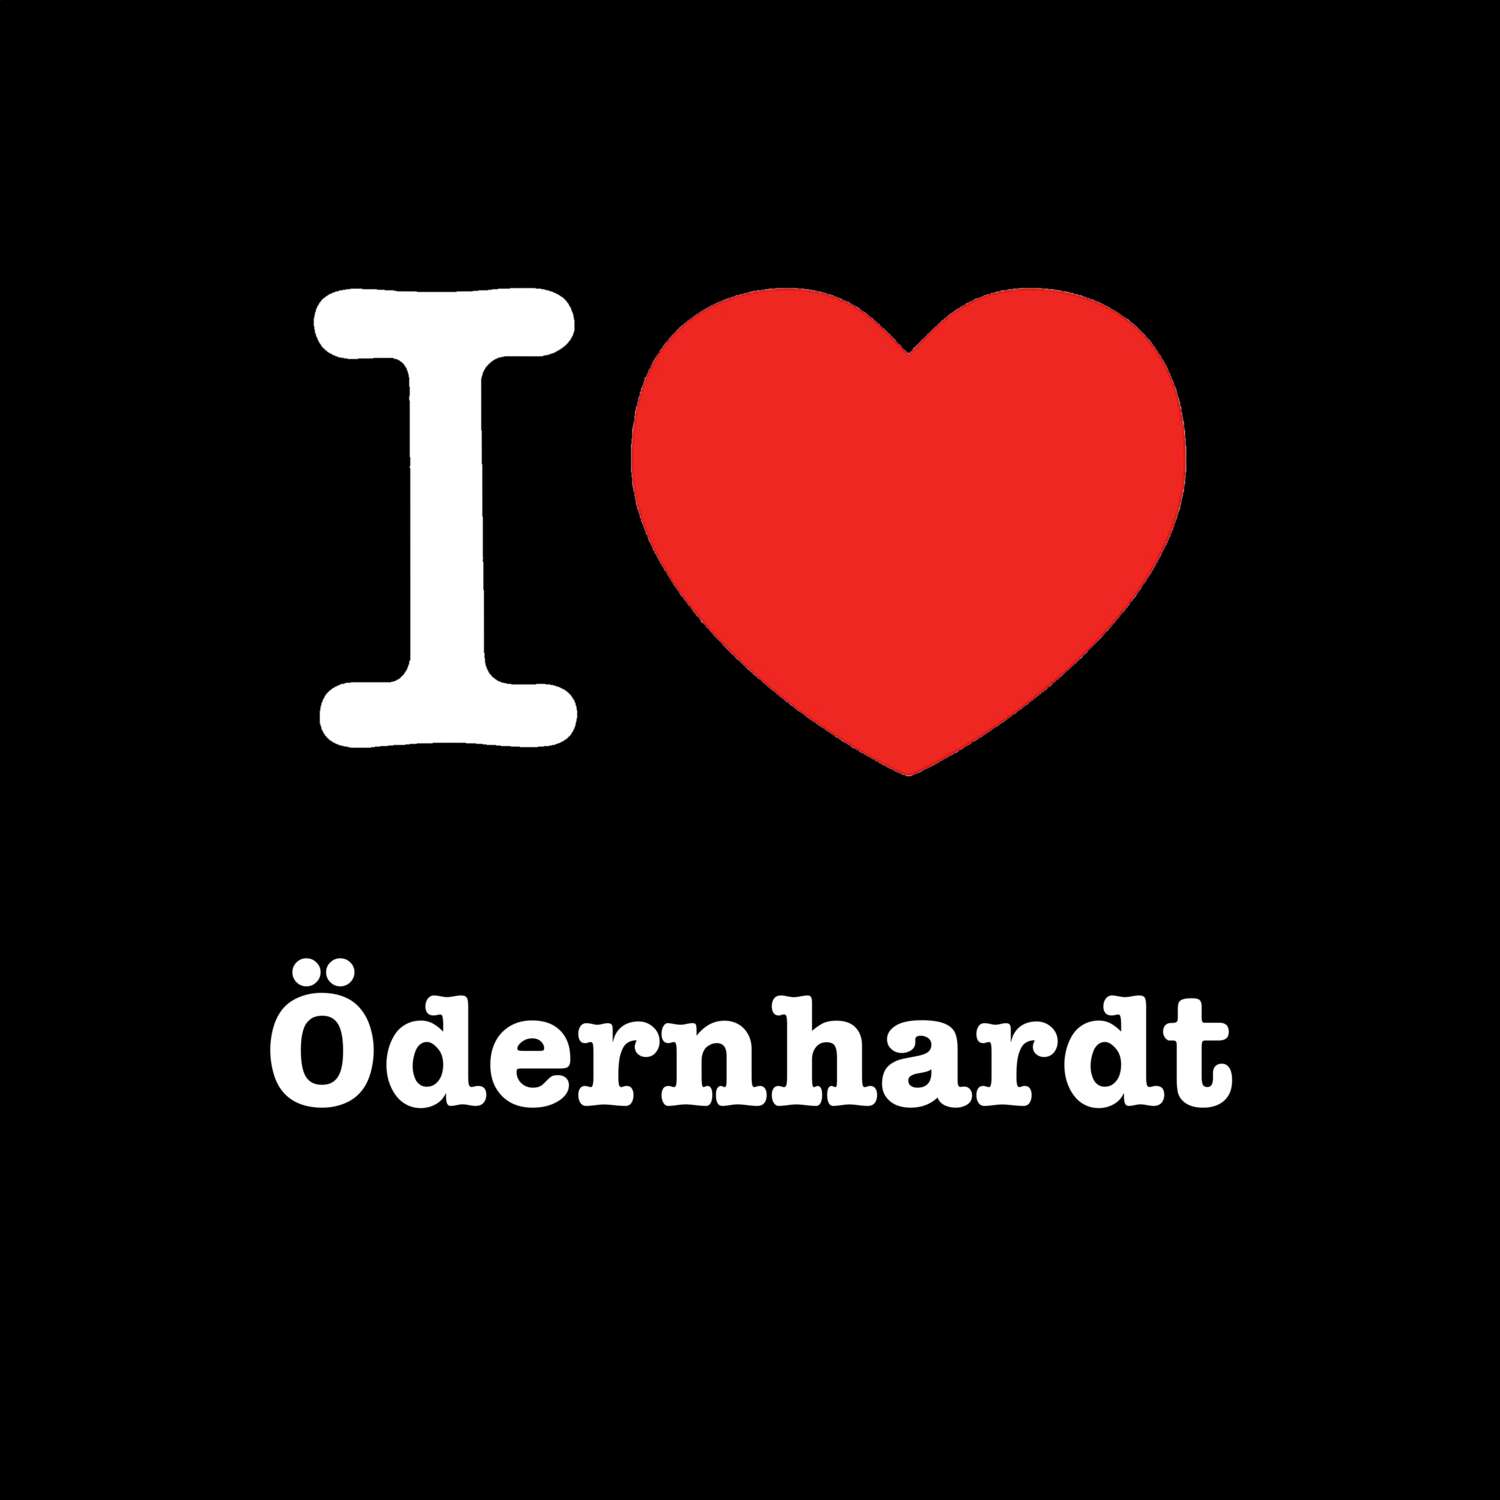 Ödernhardt T-Shirt »I love«